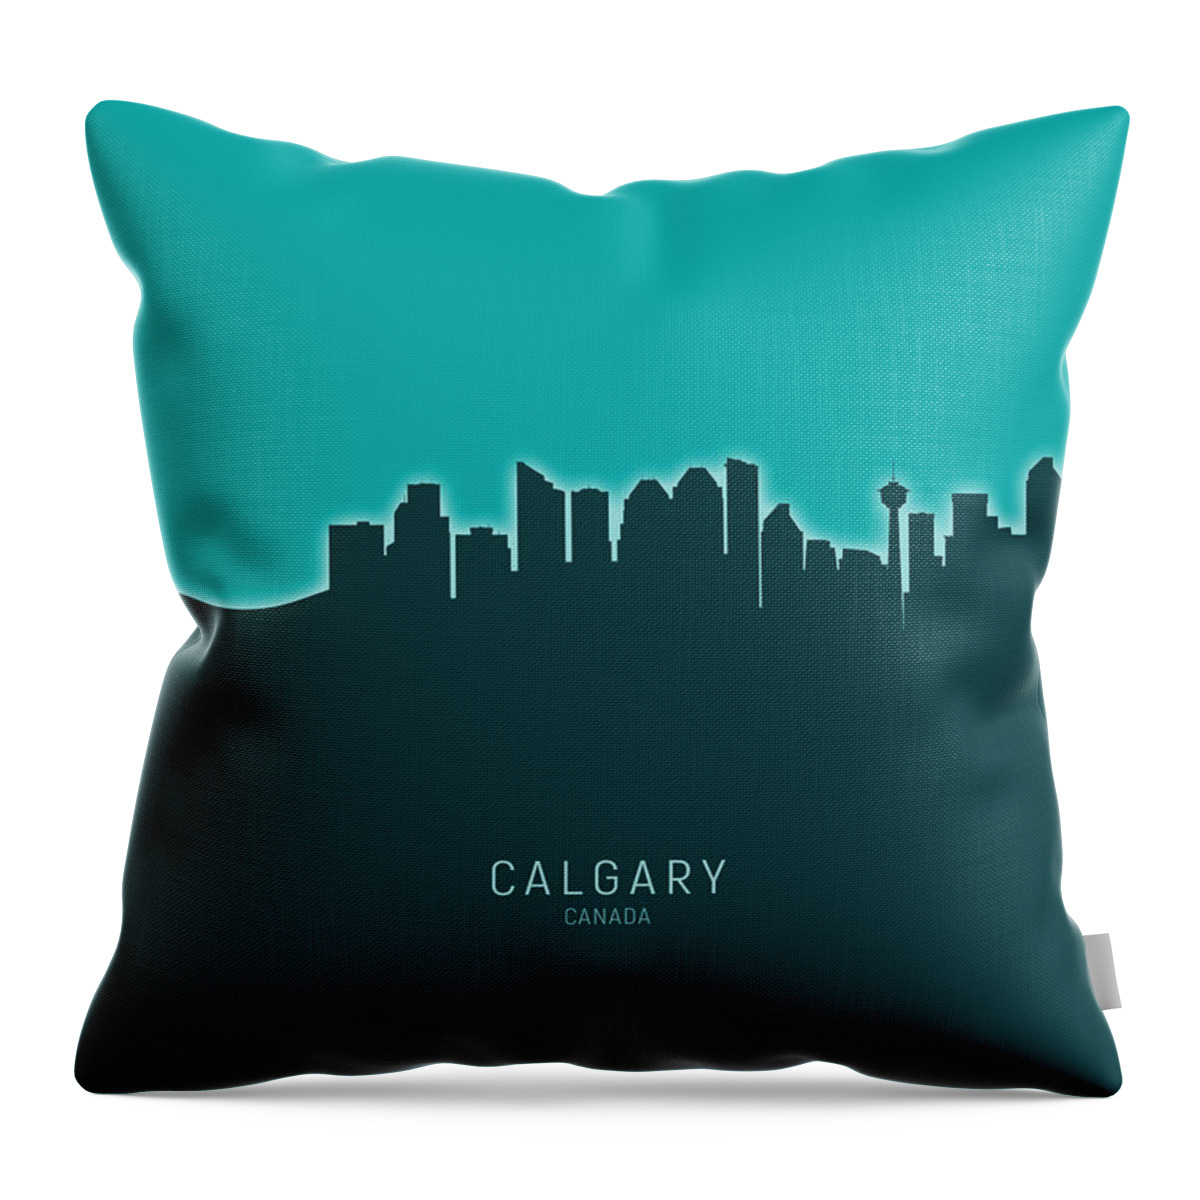 Calgary Throw Pillow featuring the digital art Calgary Canada Skyline #20 by Michael Tompsett